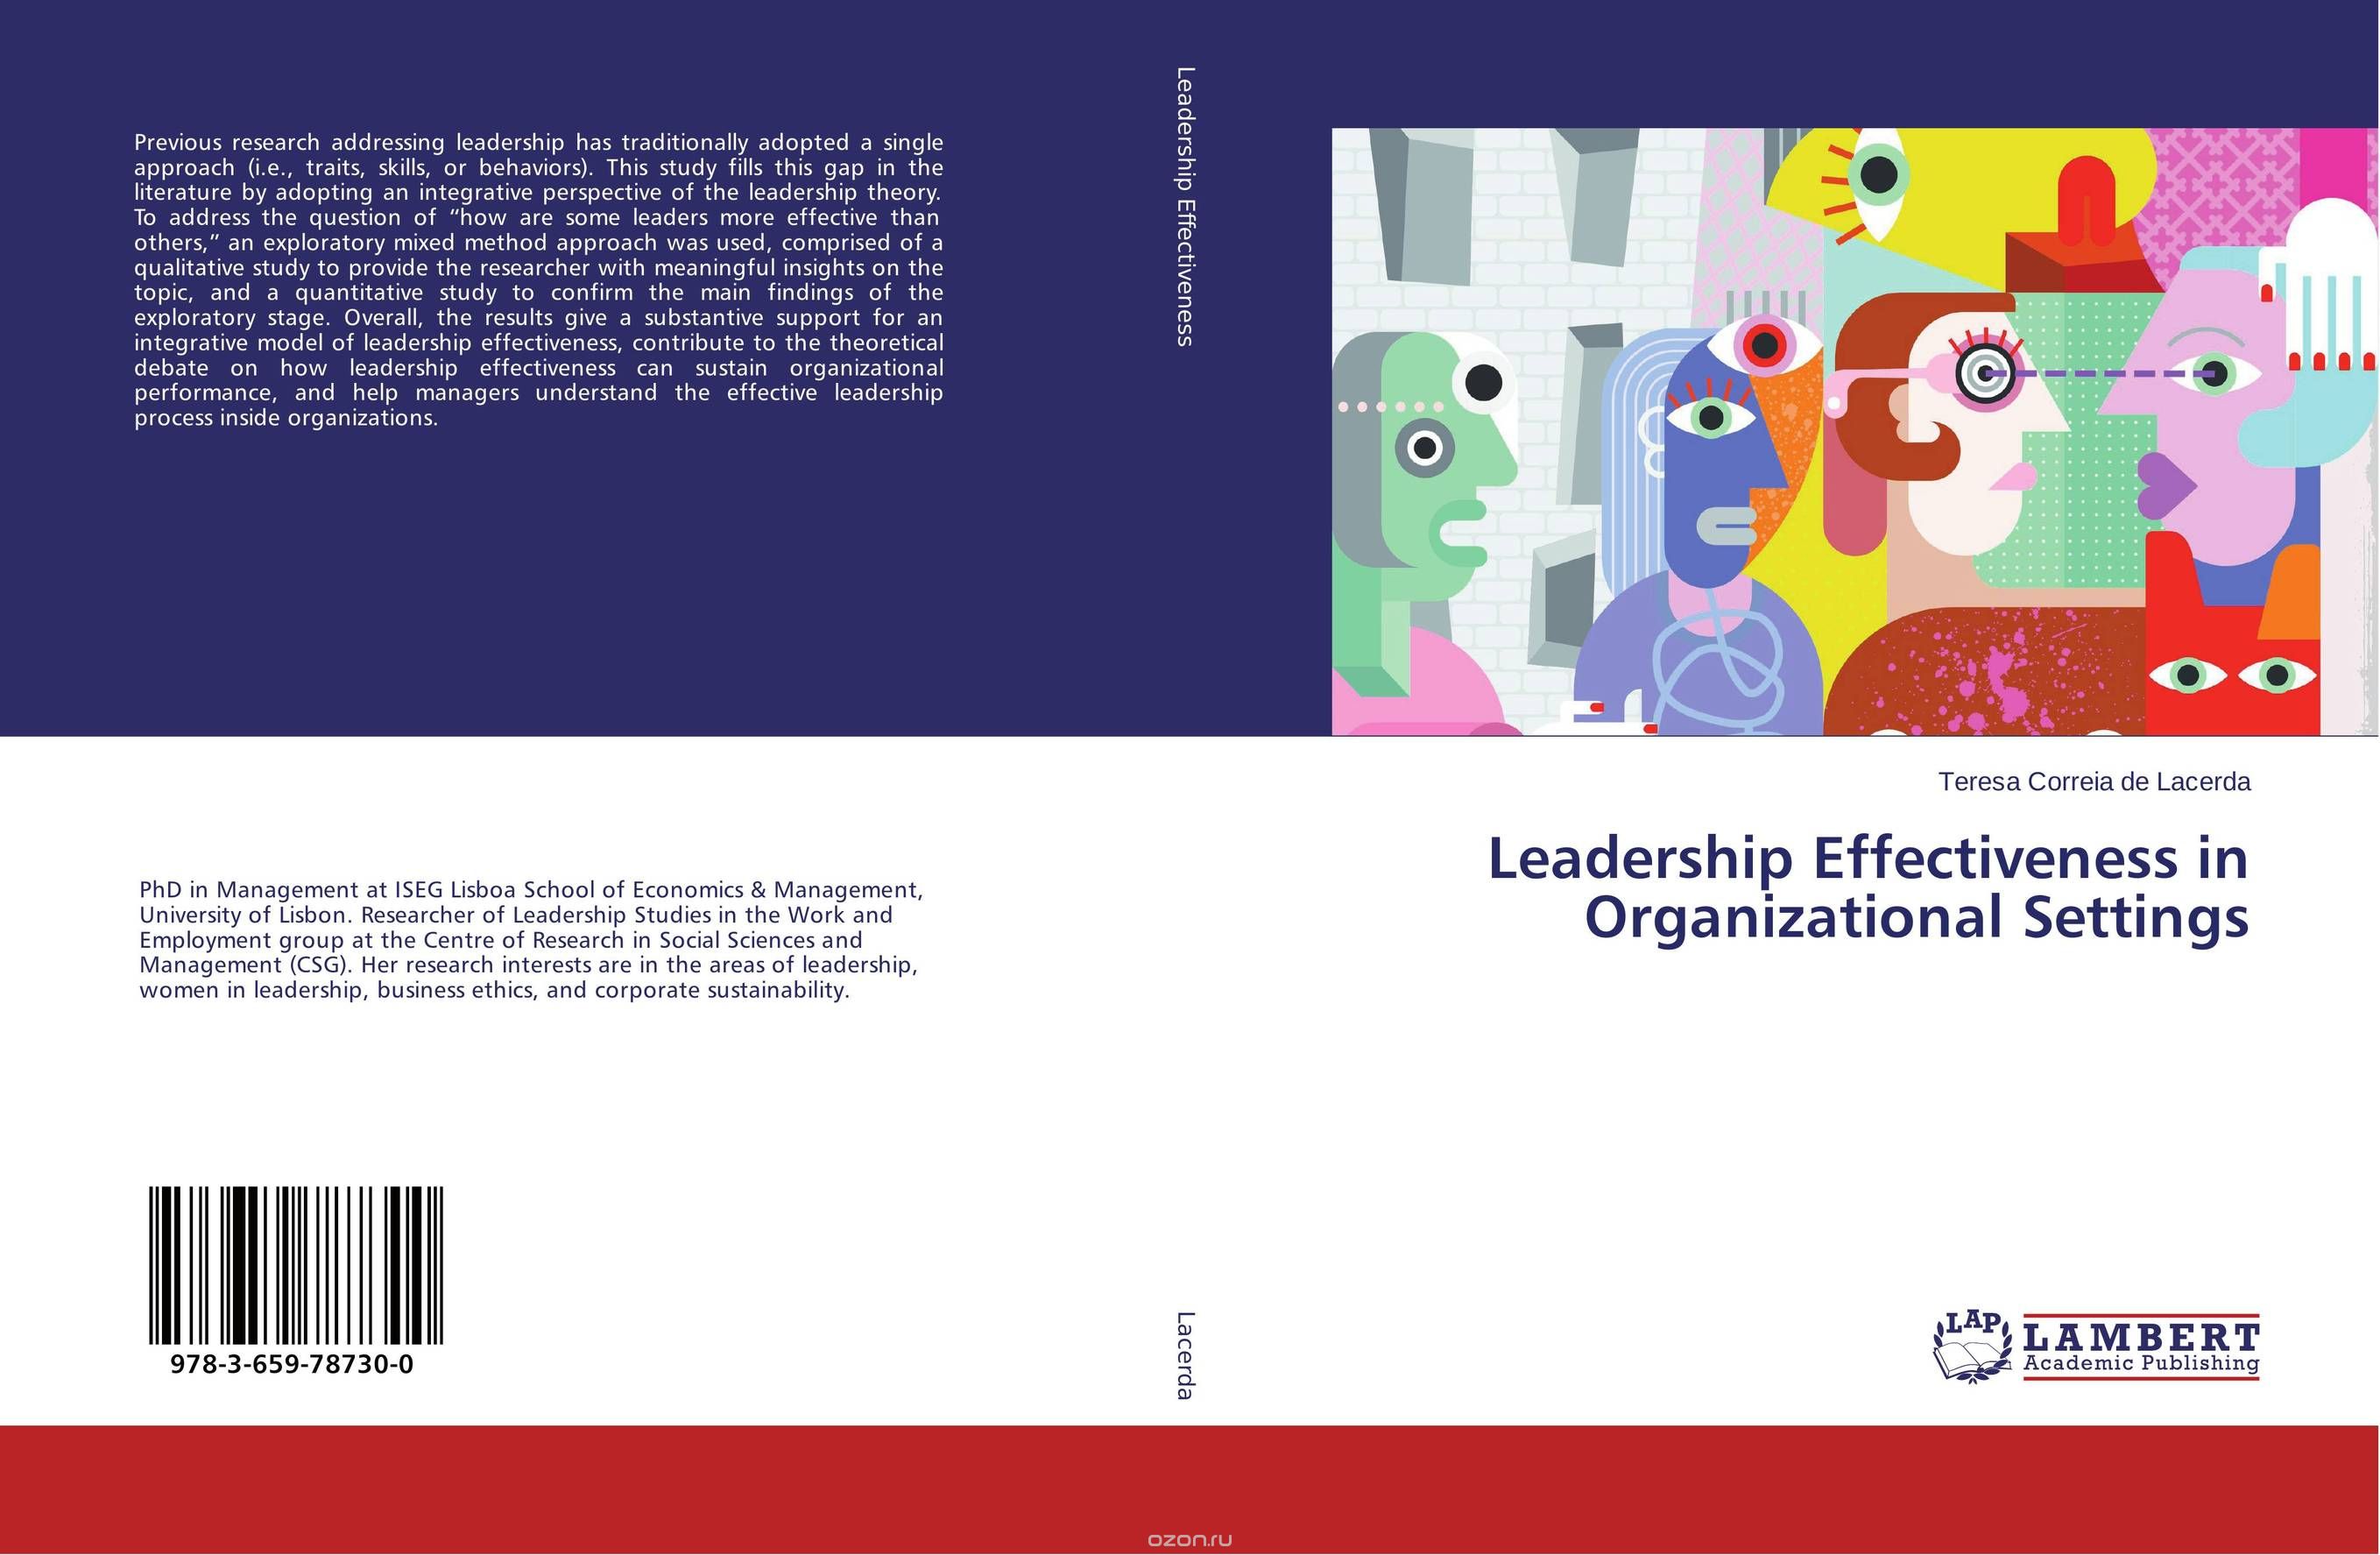 Скачать книгу "Leadership Effectiveness in Organizational Settings"